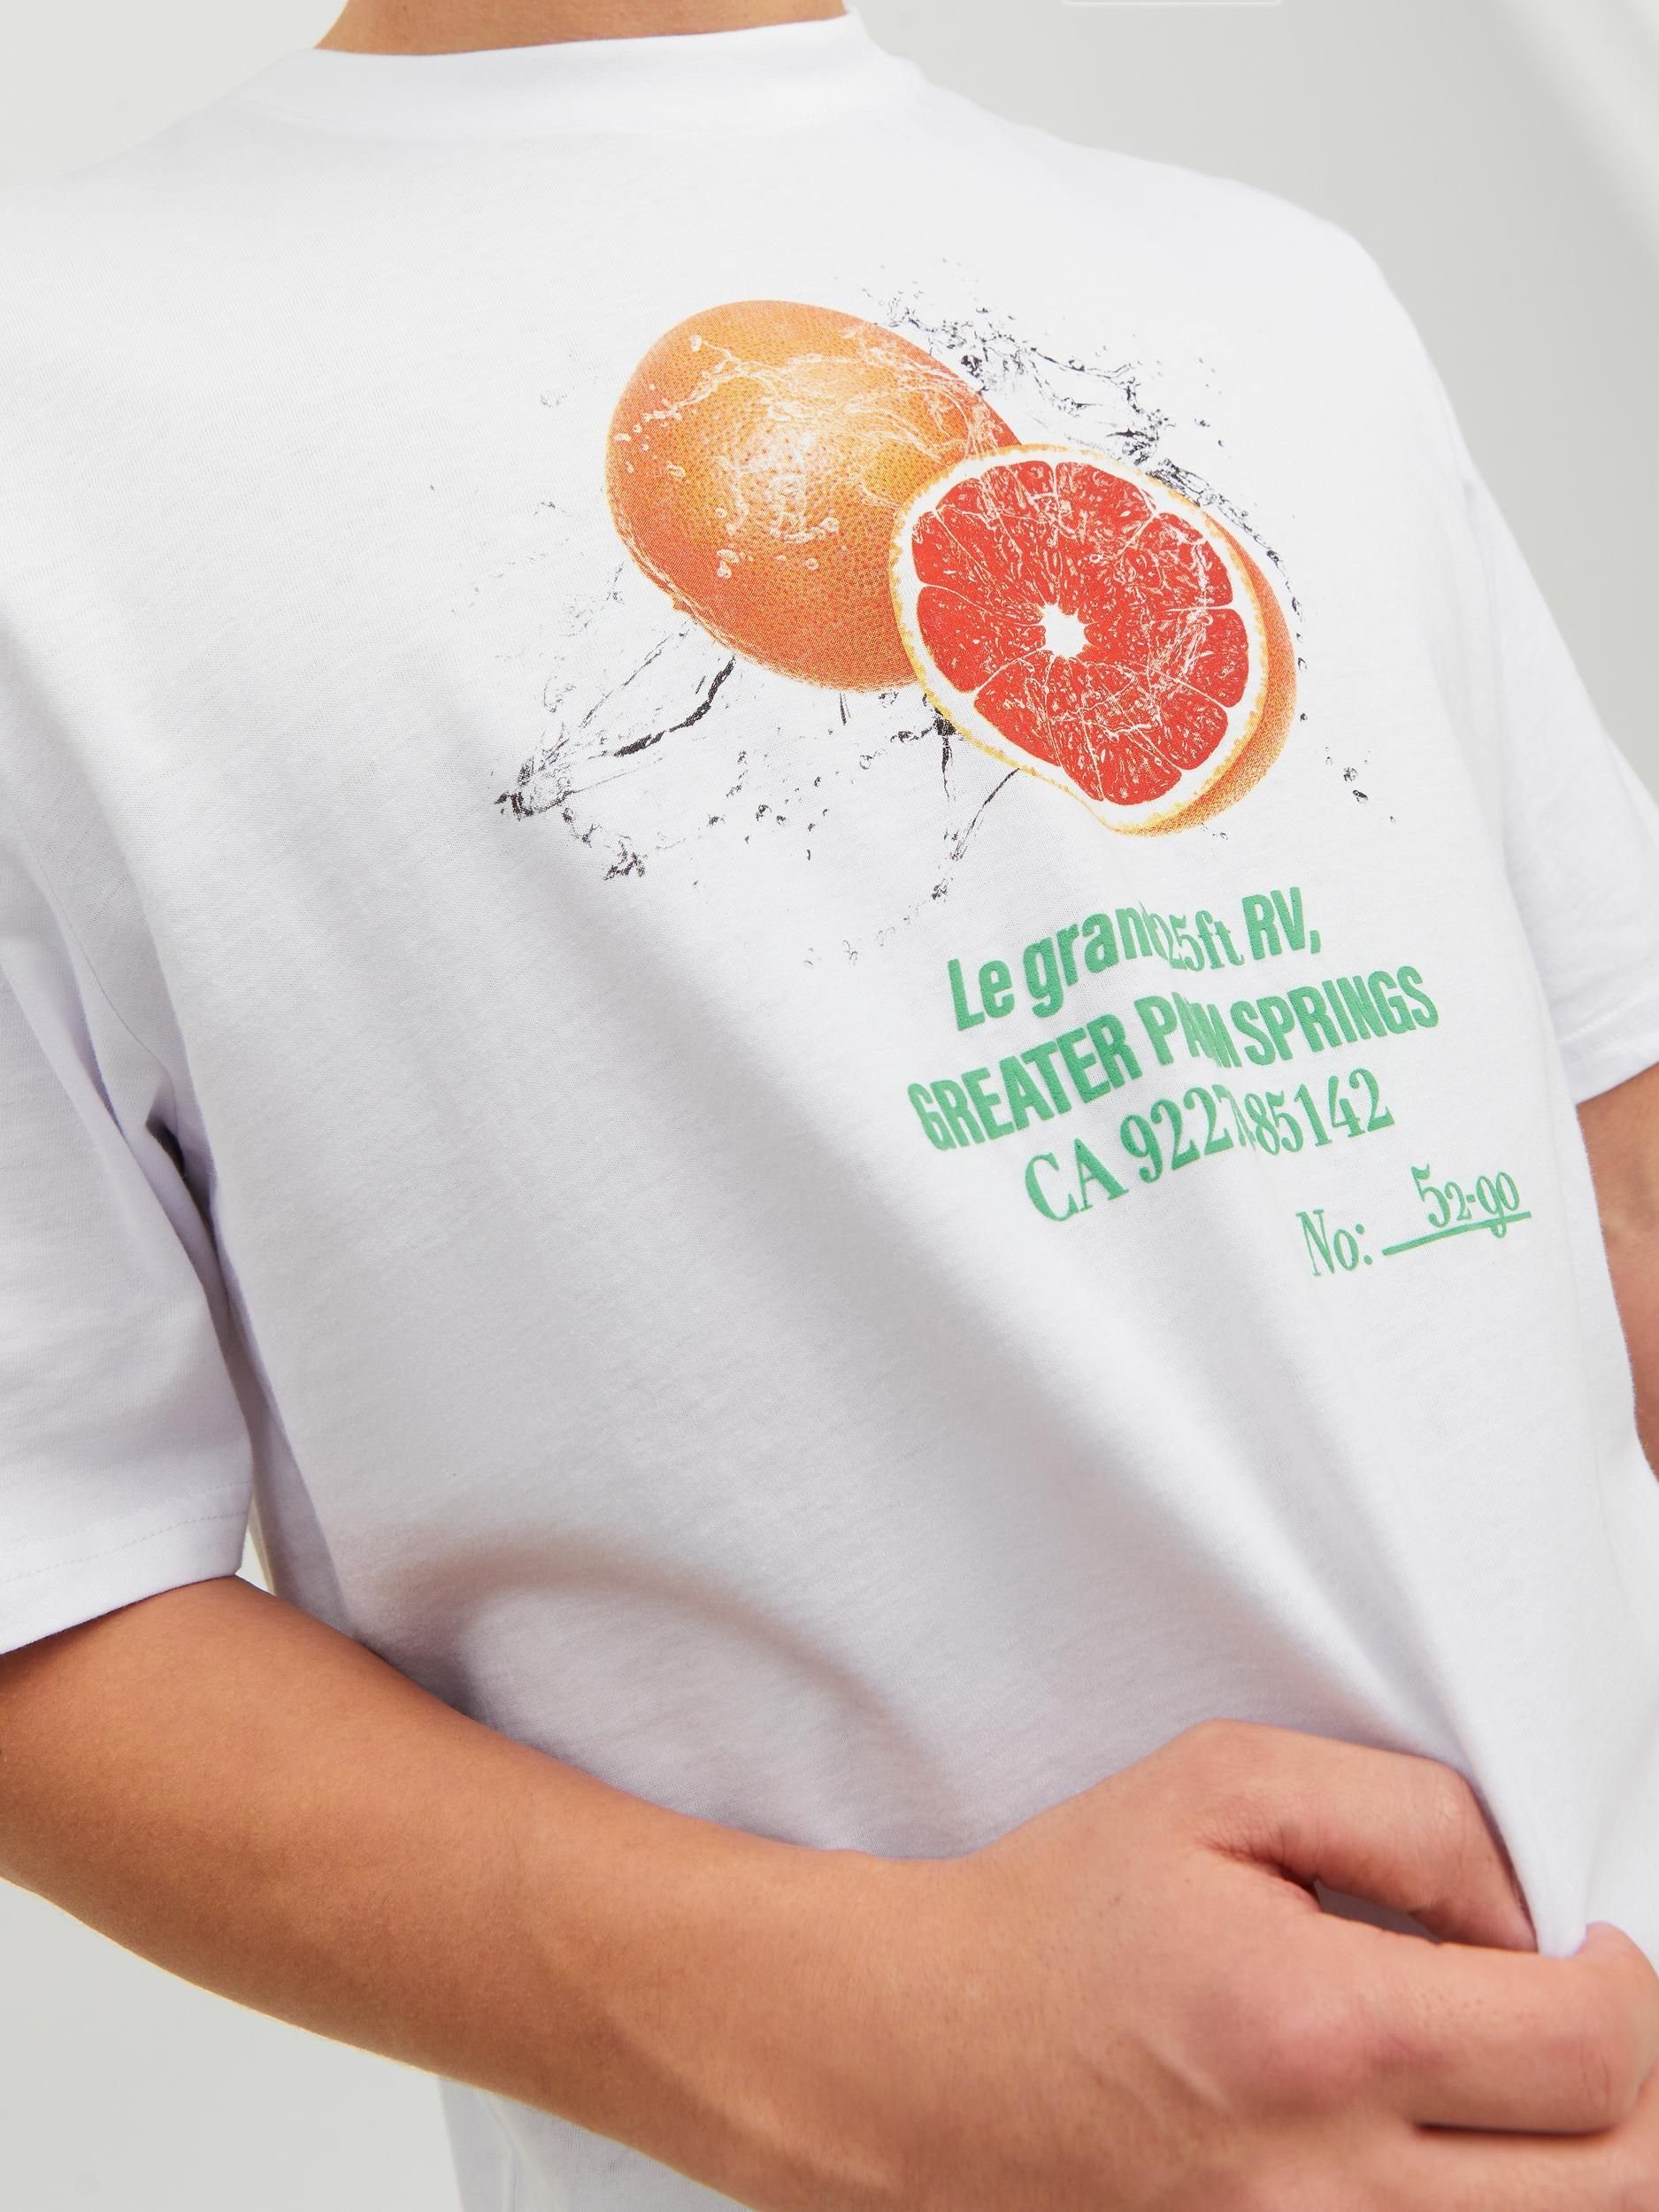 Jack & Jones T-Shirt FRONTPRINT White/FRUIT